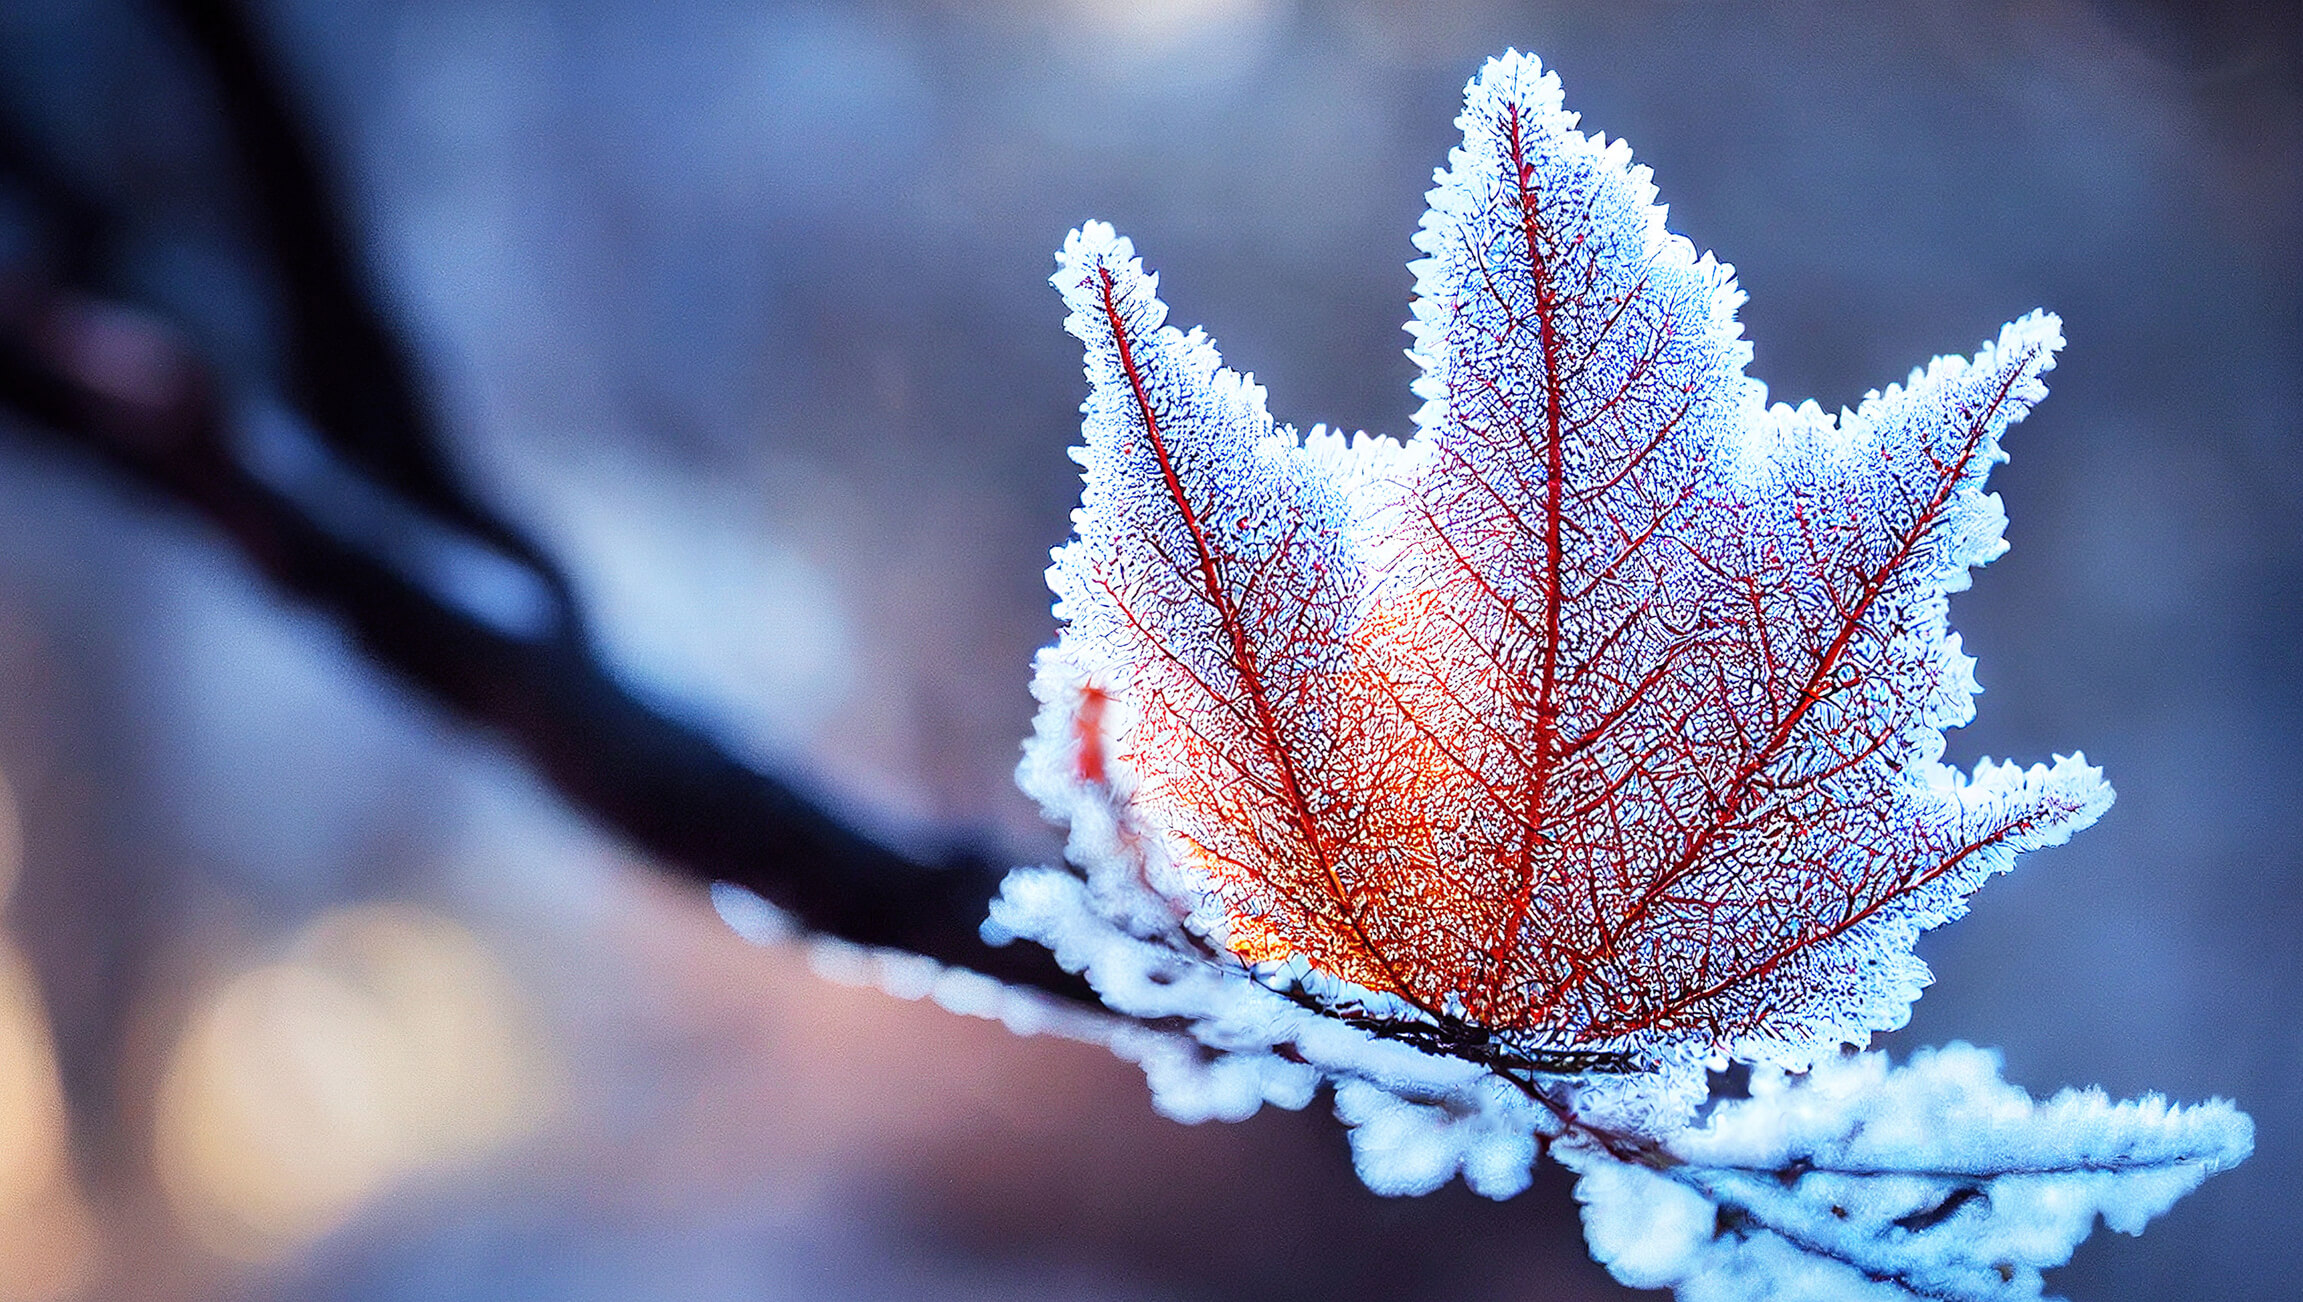 A frosty maple leaf on a branch